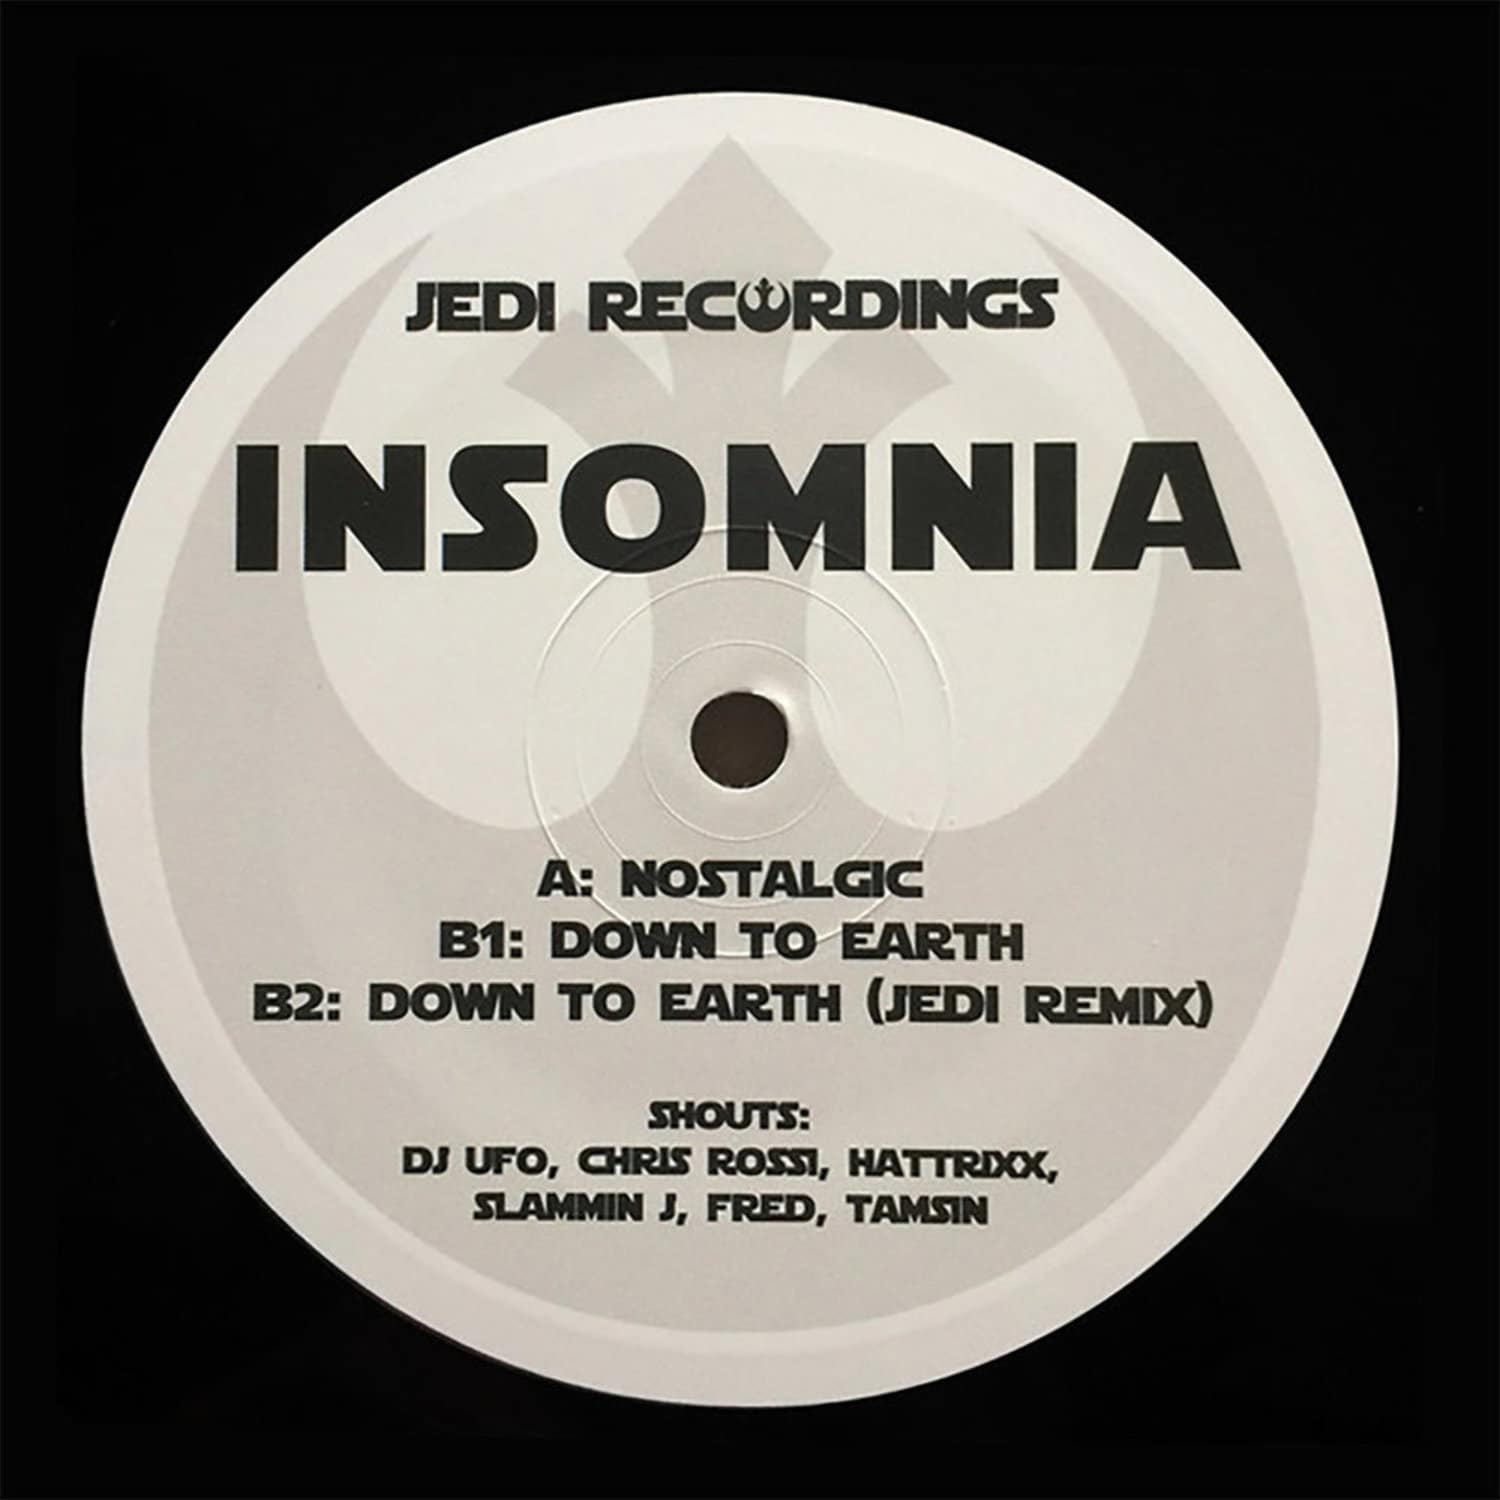 Insomnia - NOSTALGIC / DOWN TO EARTH 